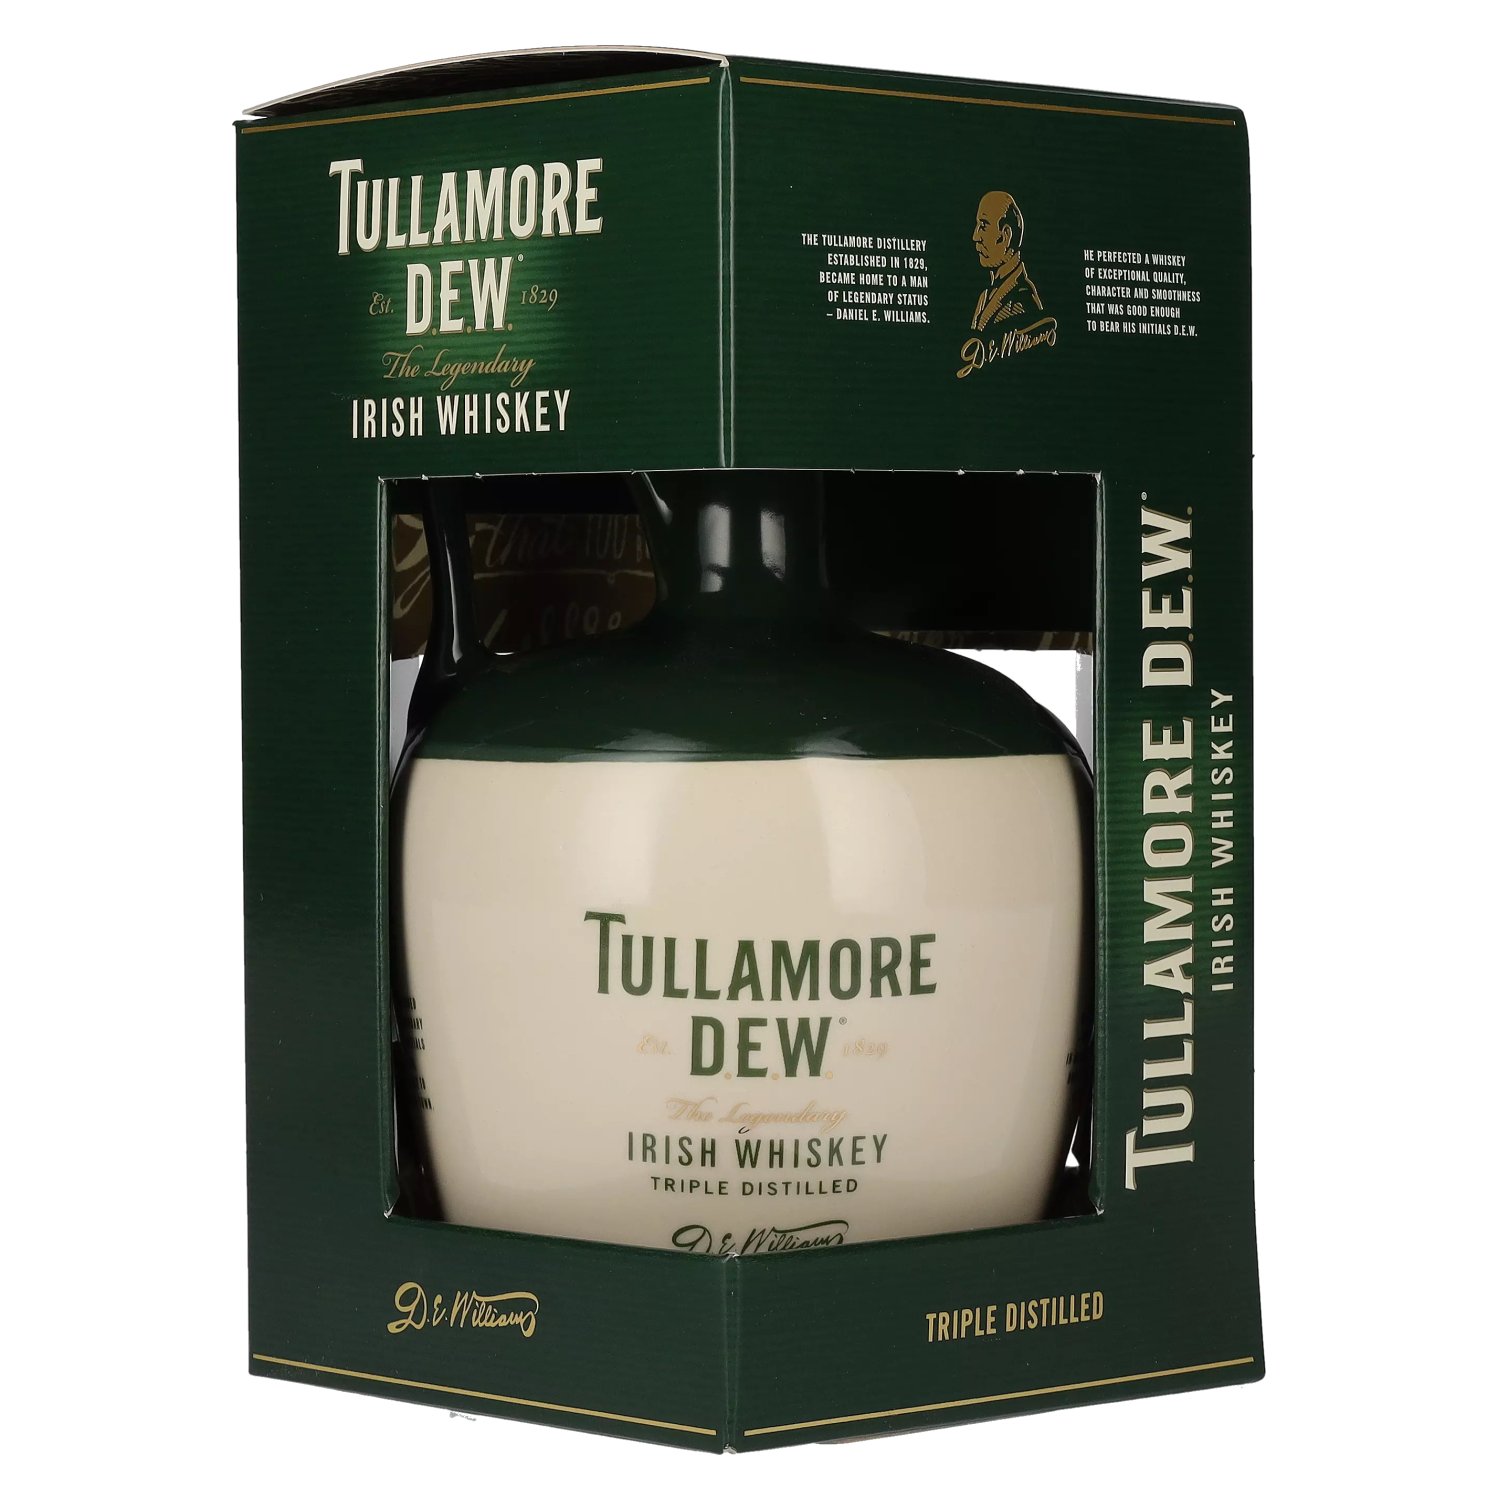 0,7l Tullamore Irish 40% Edition Giftbox Crock Vol. in Whiskey D.E.W.